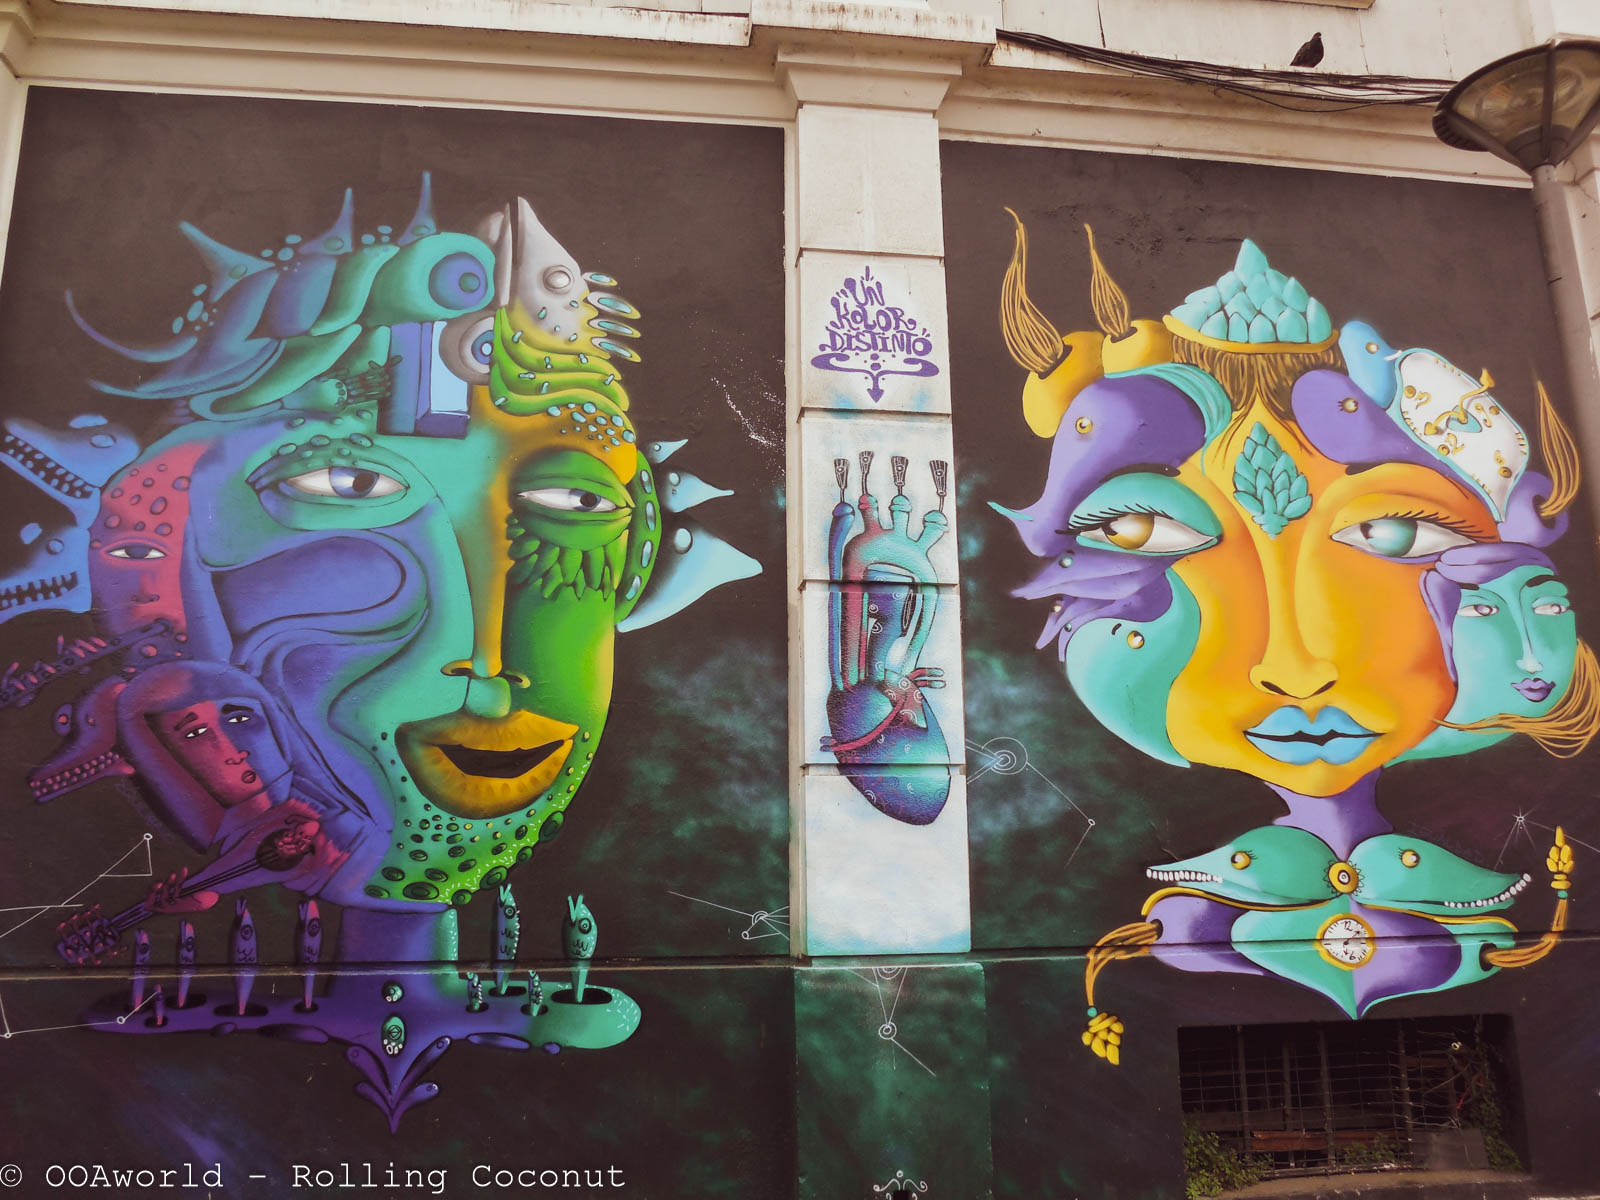 Valparaiso Street Art - OOAworld Rolling Coconut Photo